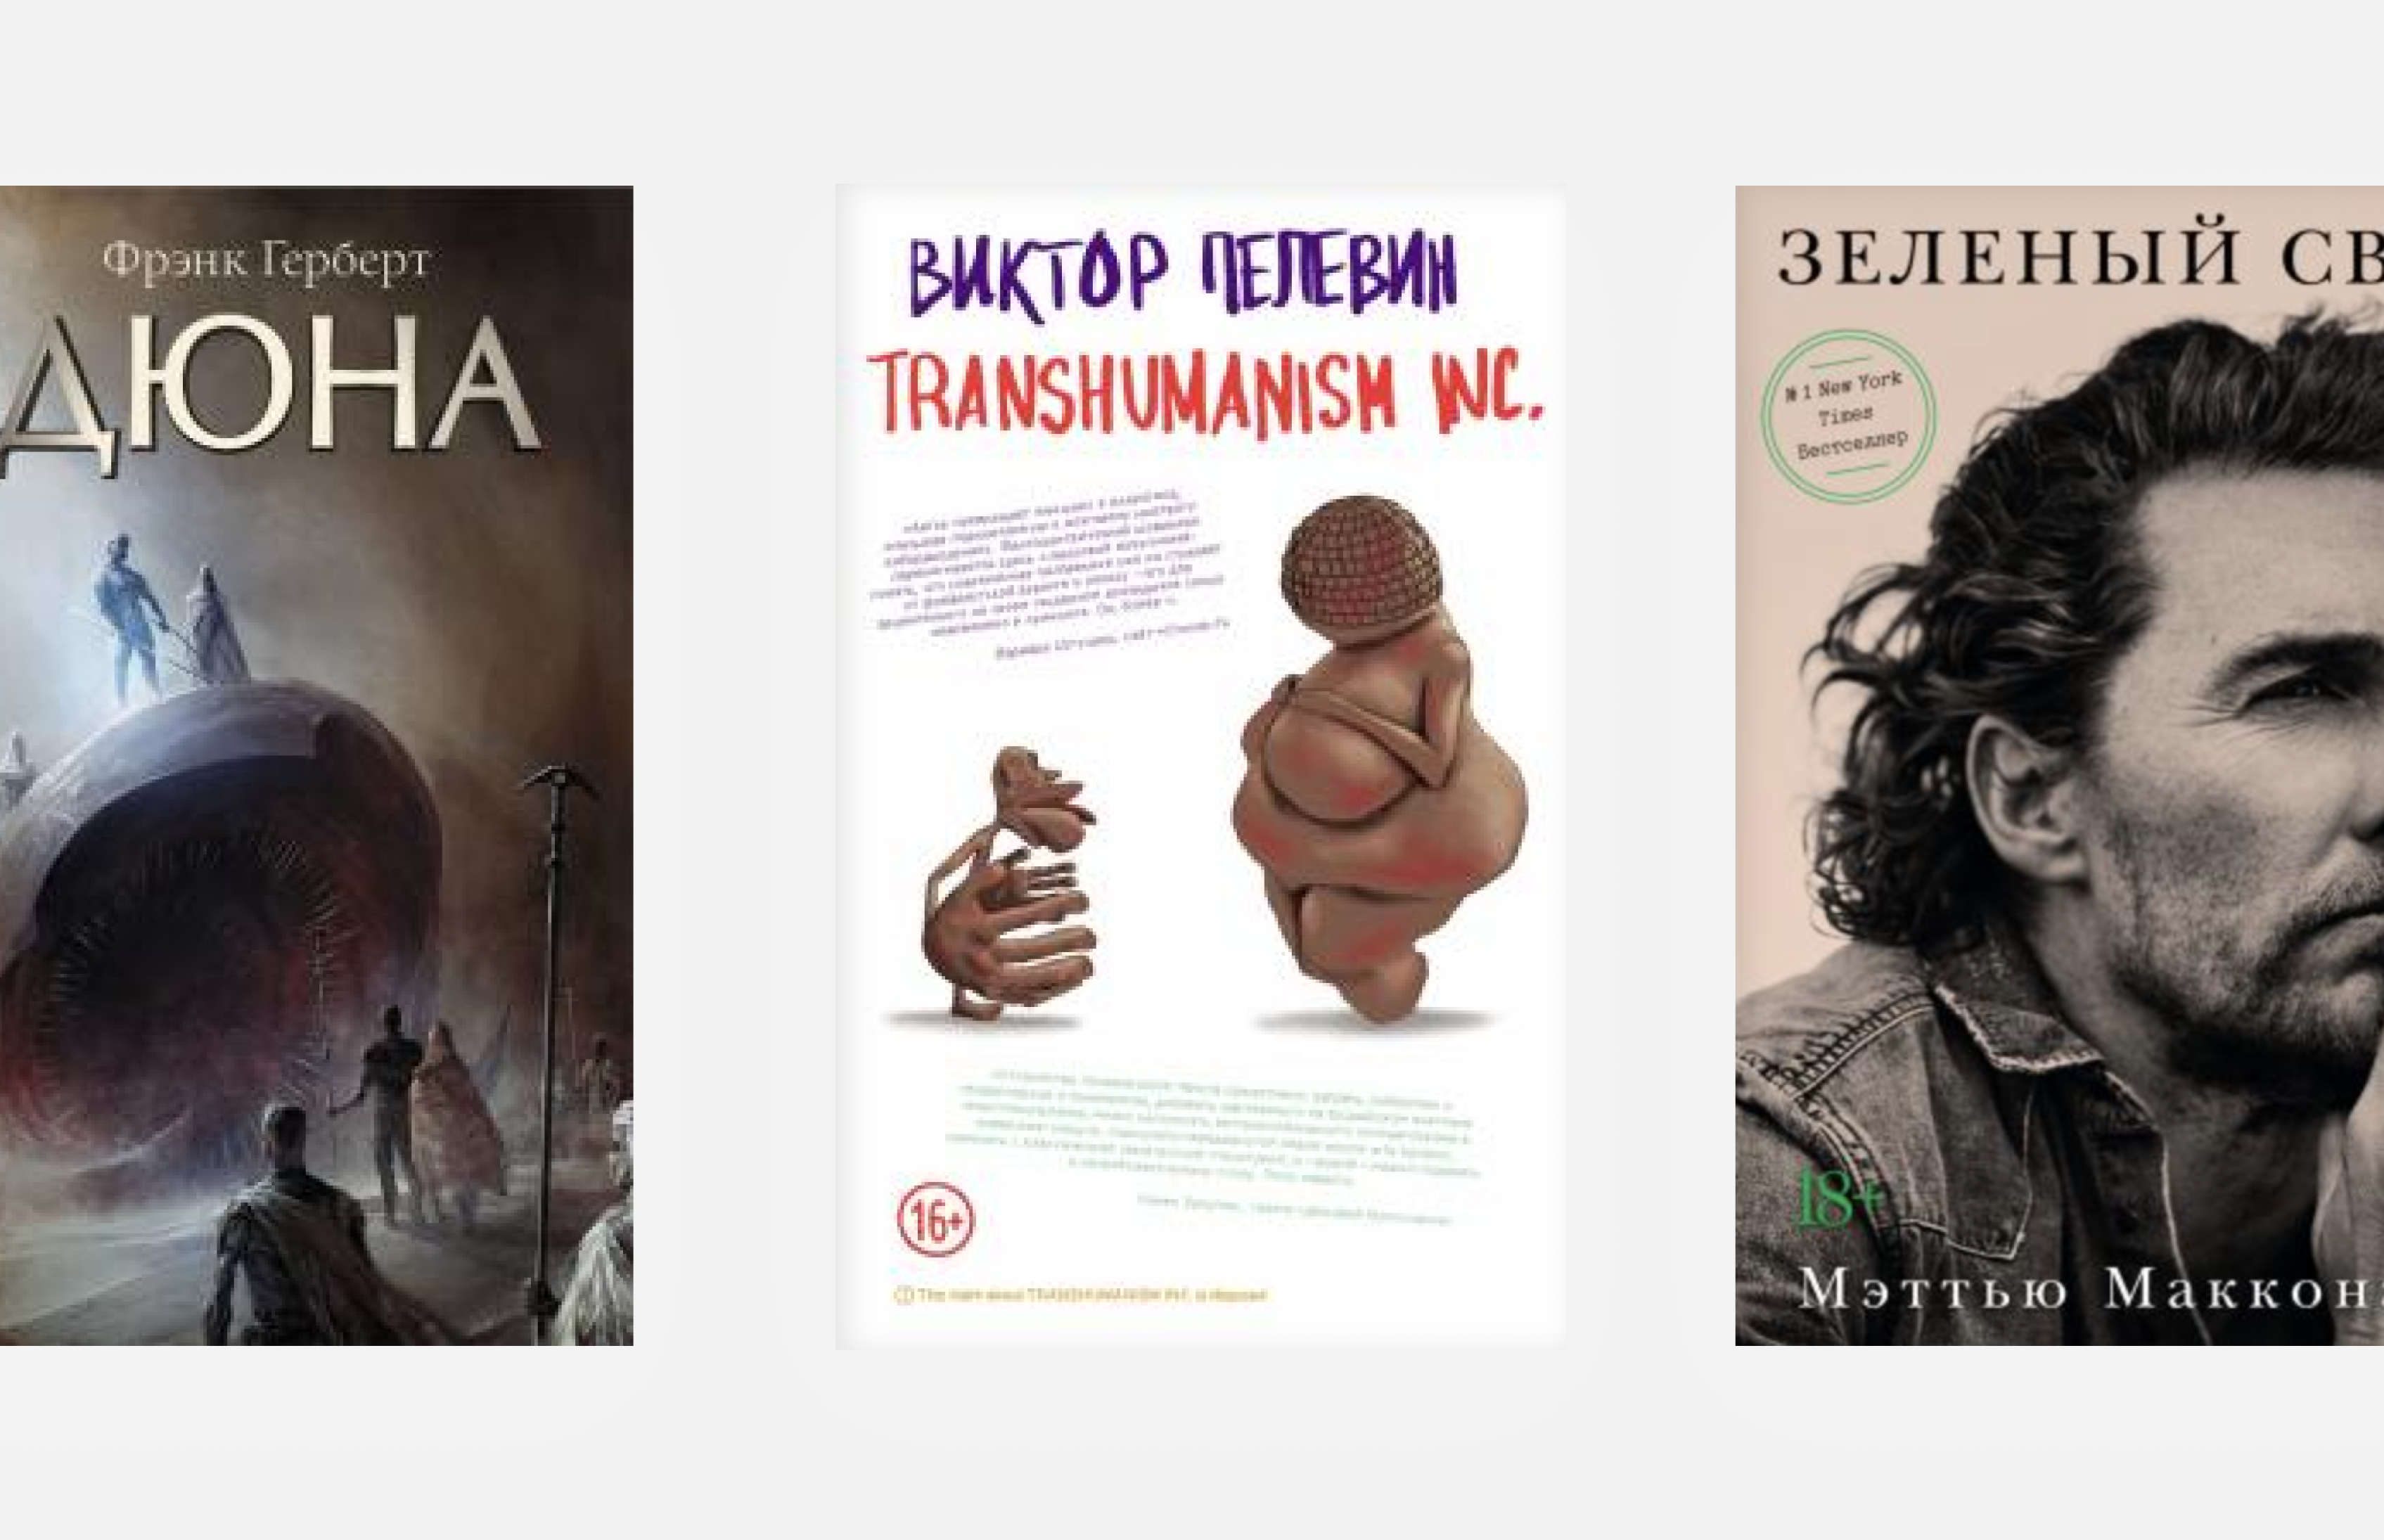 «Дюна», роман Пелевина и биография Макконахи вошли в топ книг осени